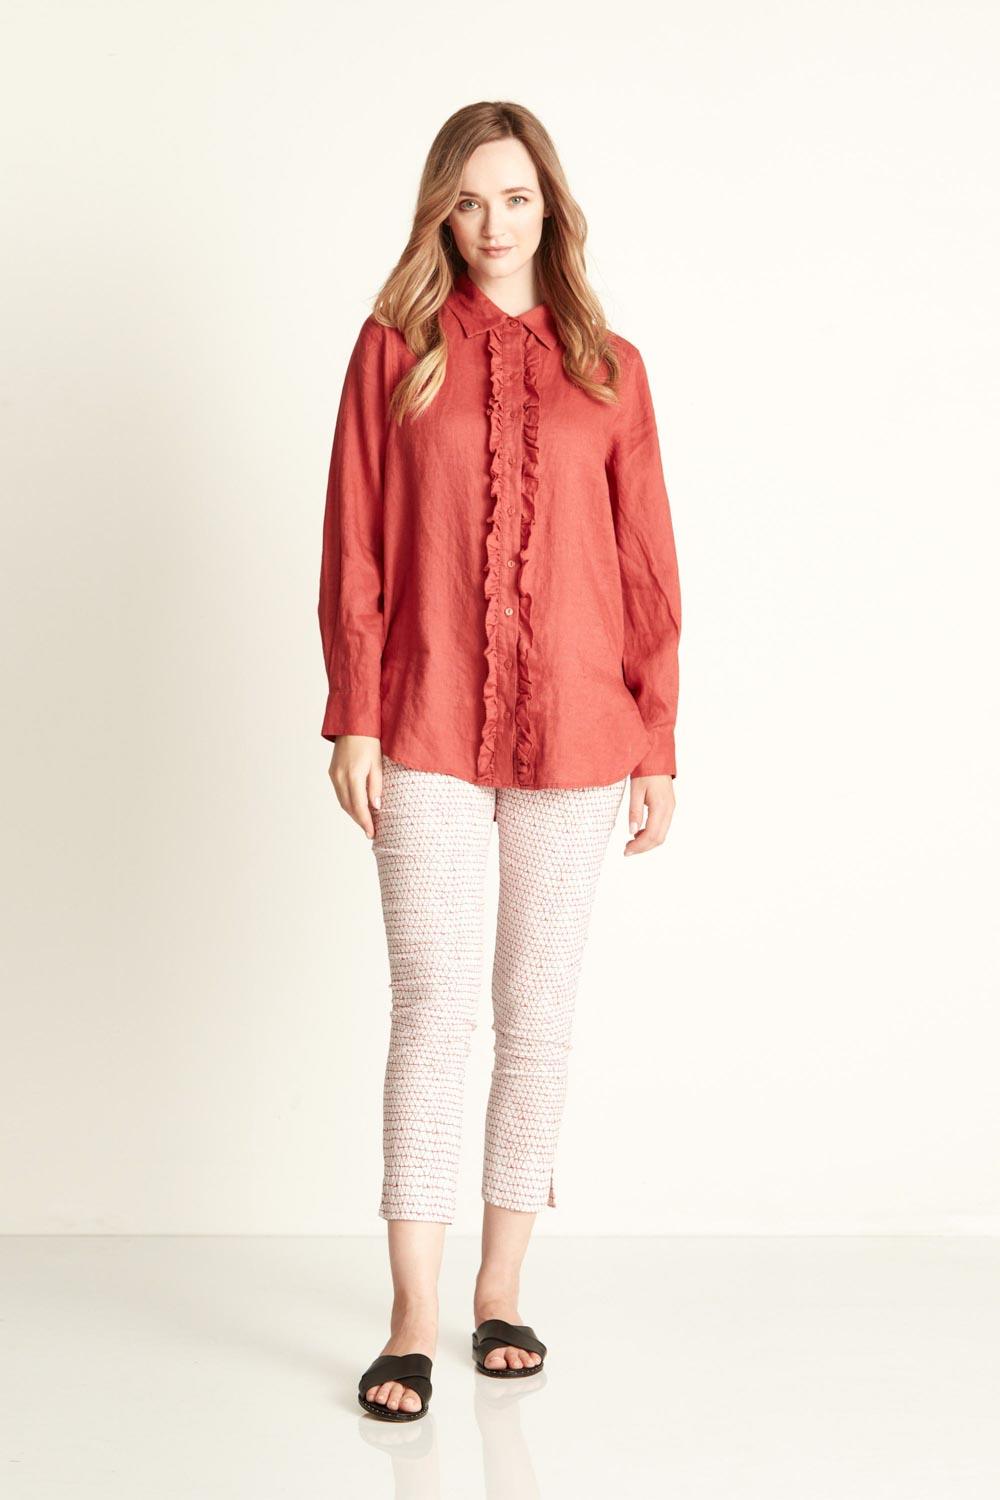 Sloane Linen Shirt - Washed Red - Shirt VERGE